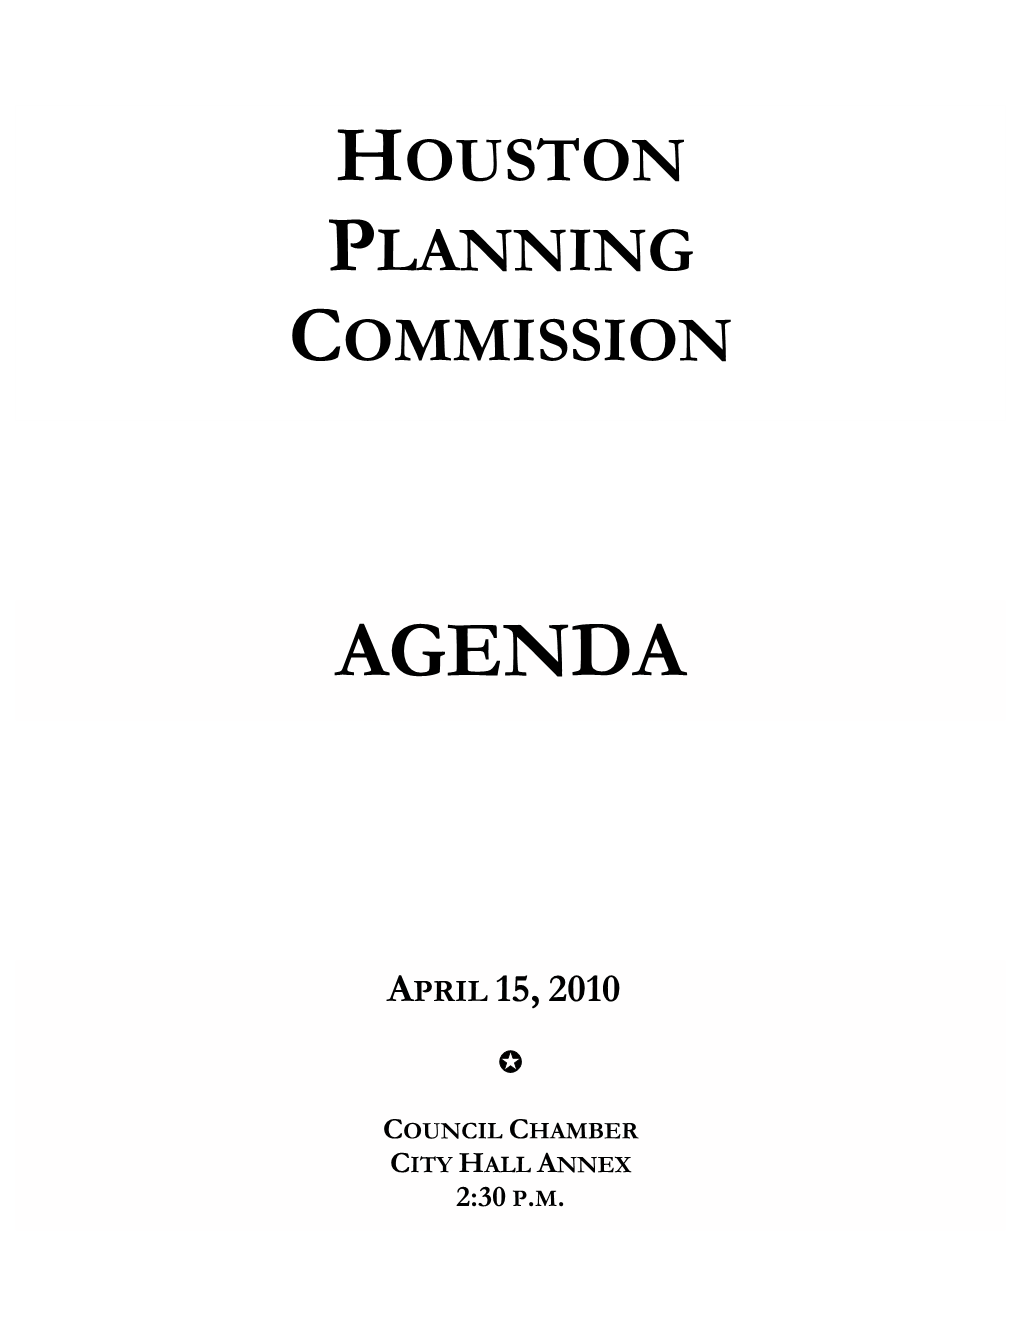 Houston Planning Commission